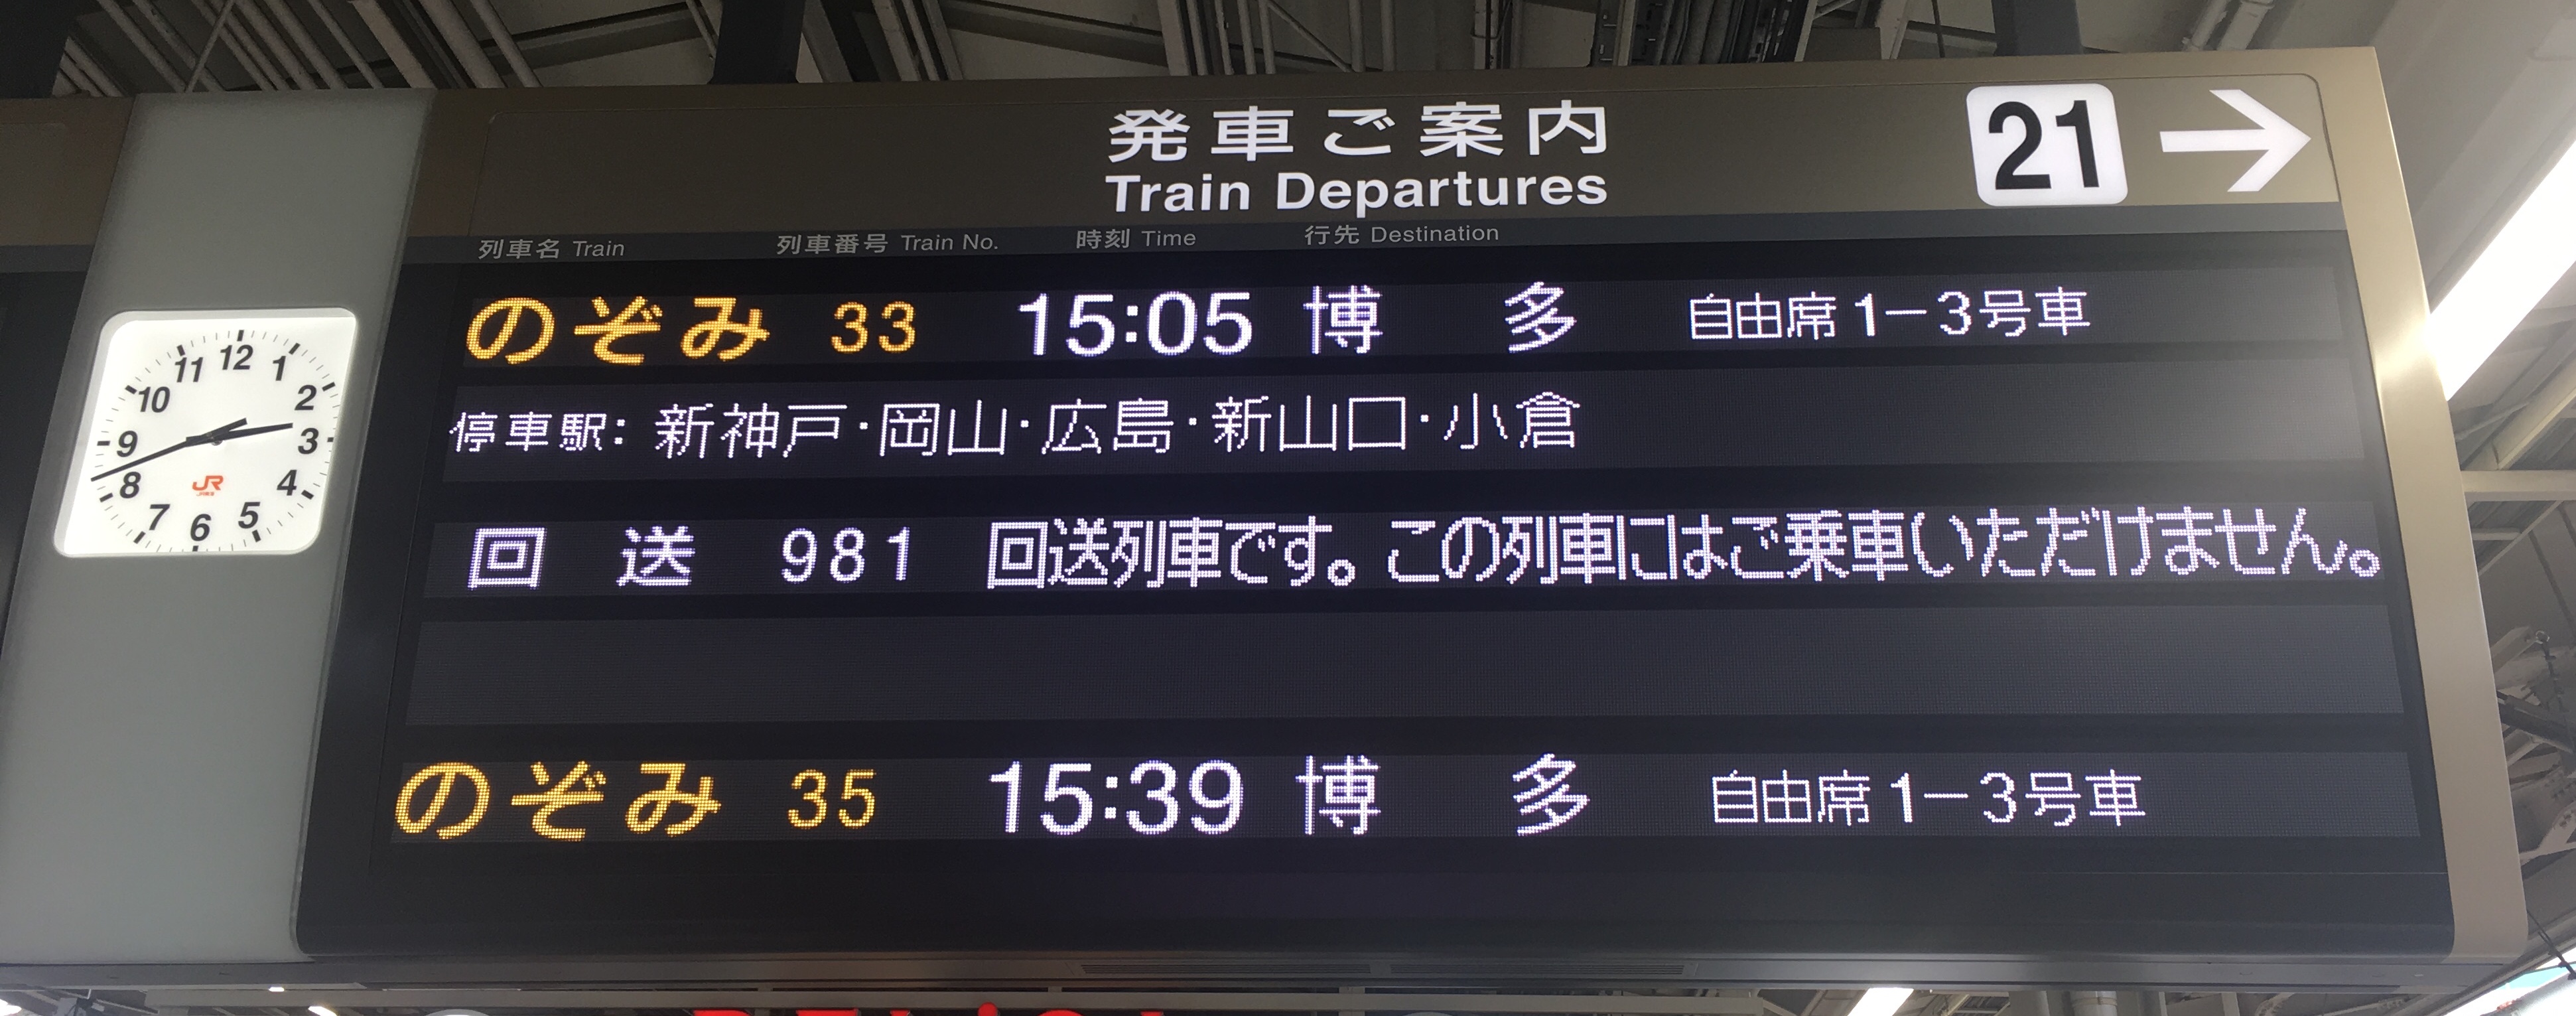 Station platform display board